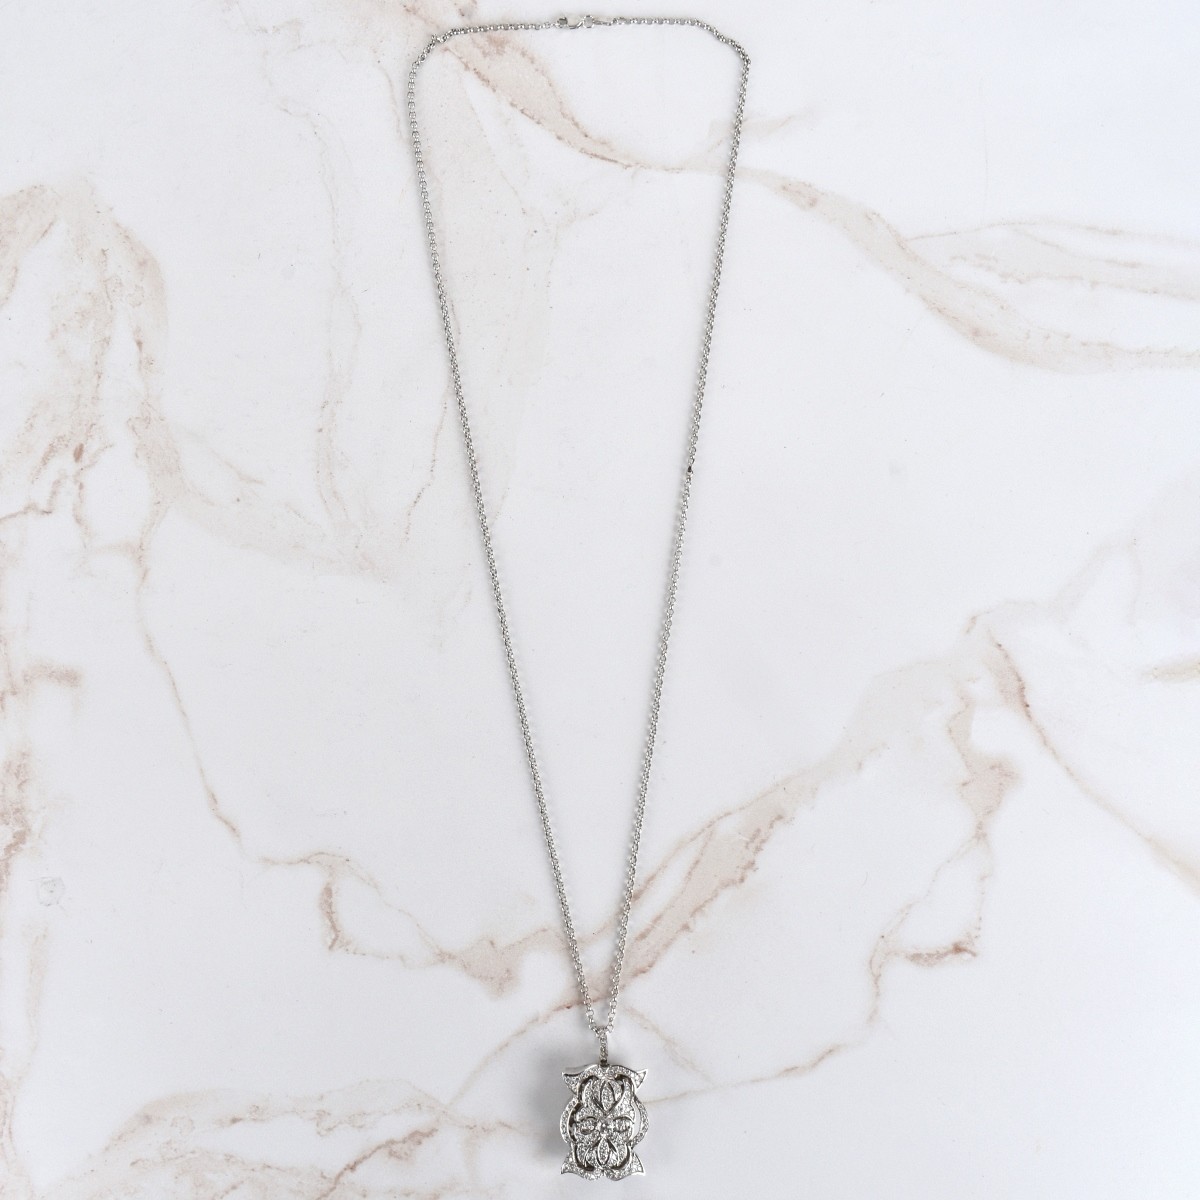 Diamond and 14K Pendant Necklace